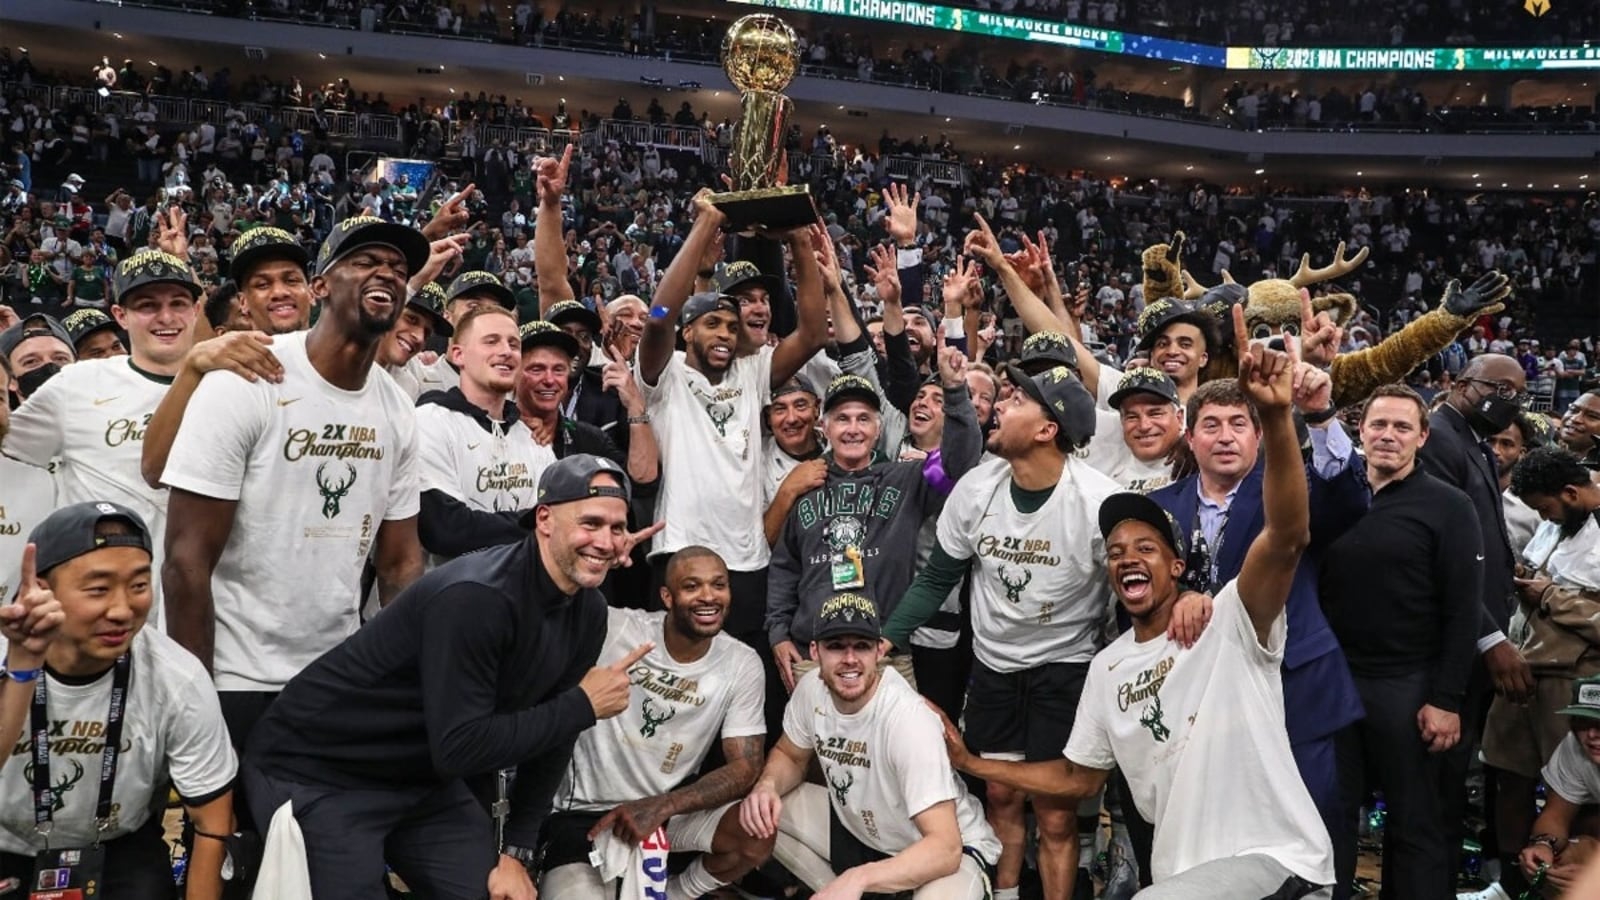 Milwaukee Bucks ORIGINAL Newspaper 2021 NBA Finals Champions 